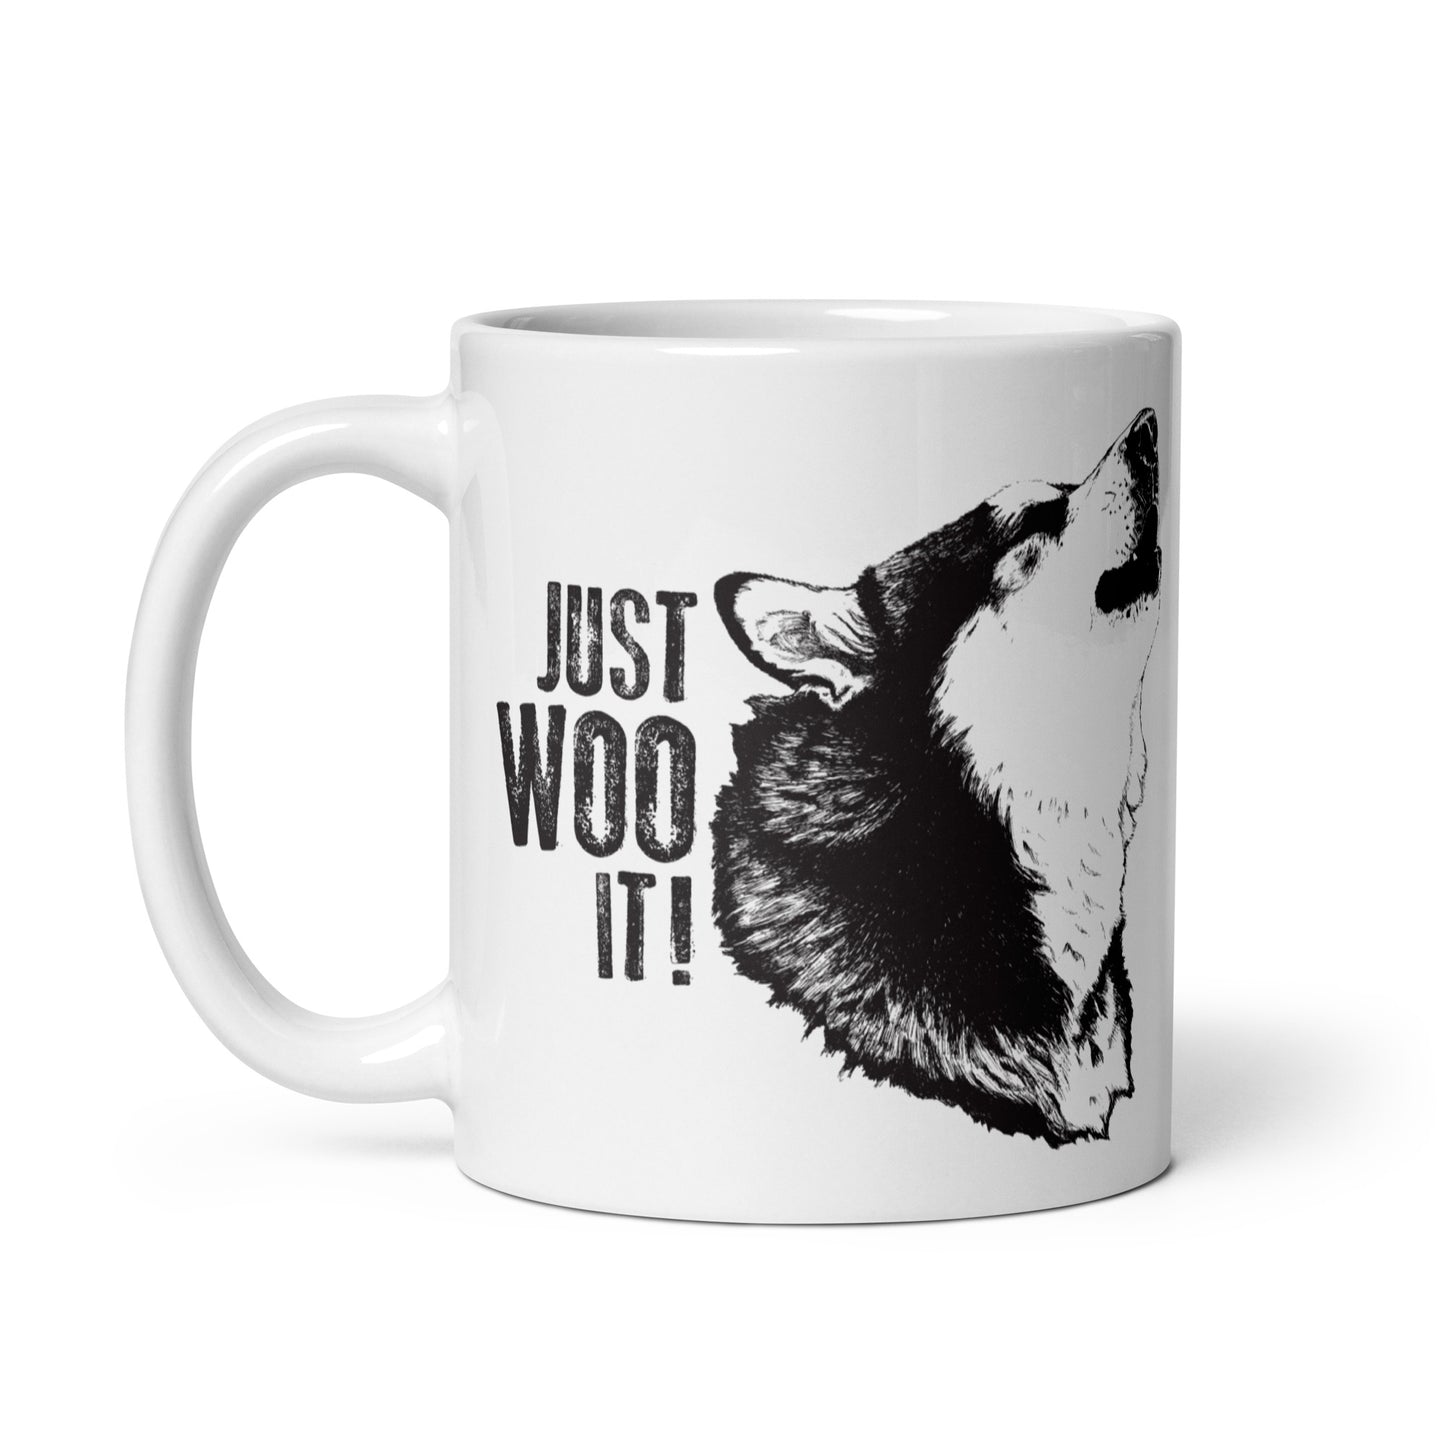 JUST WOO IT! - Alaskan Malamute - Coffee Mug